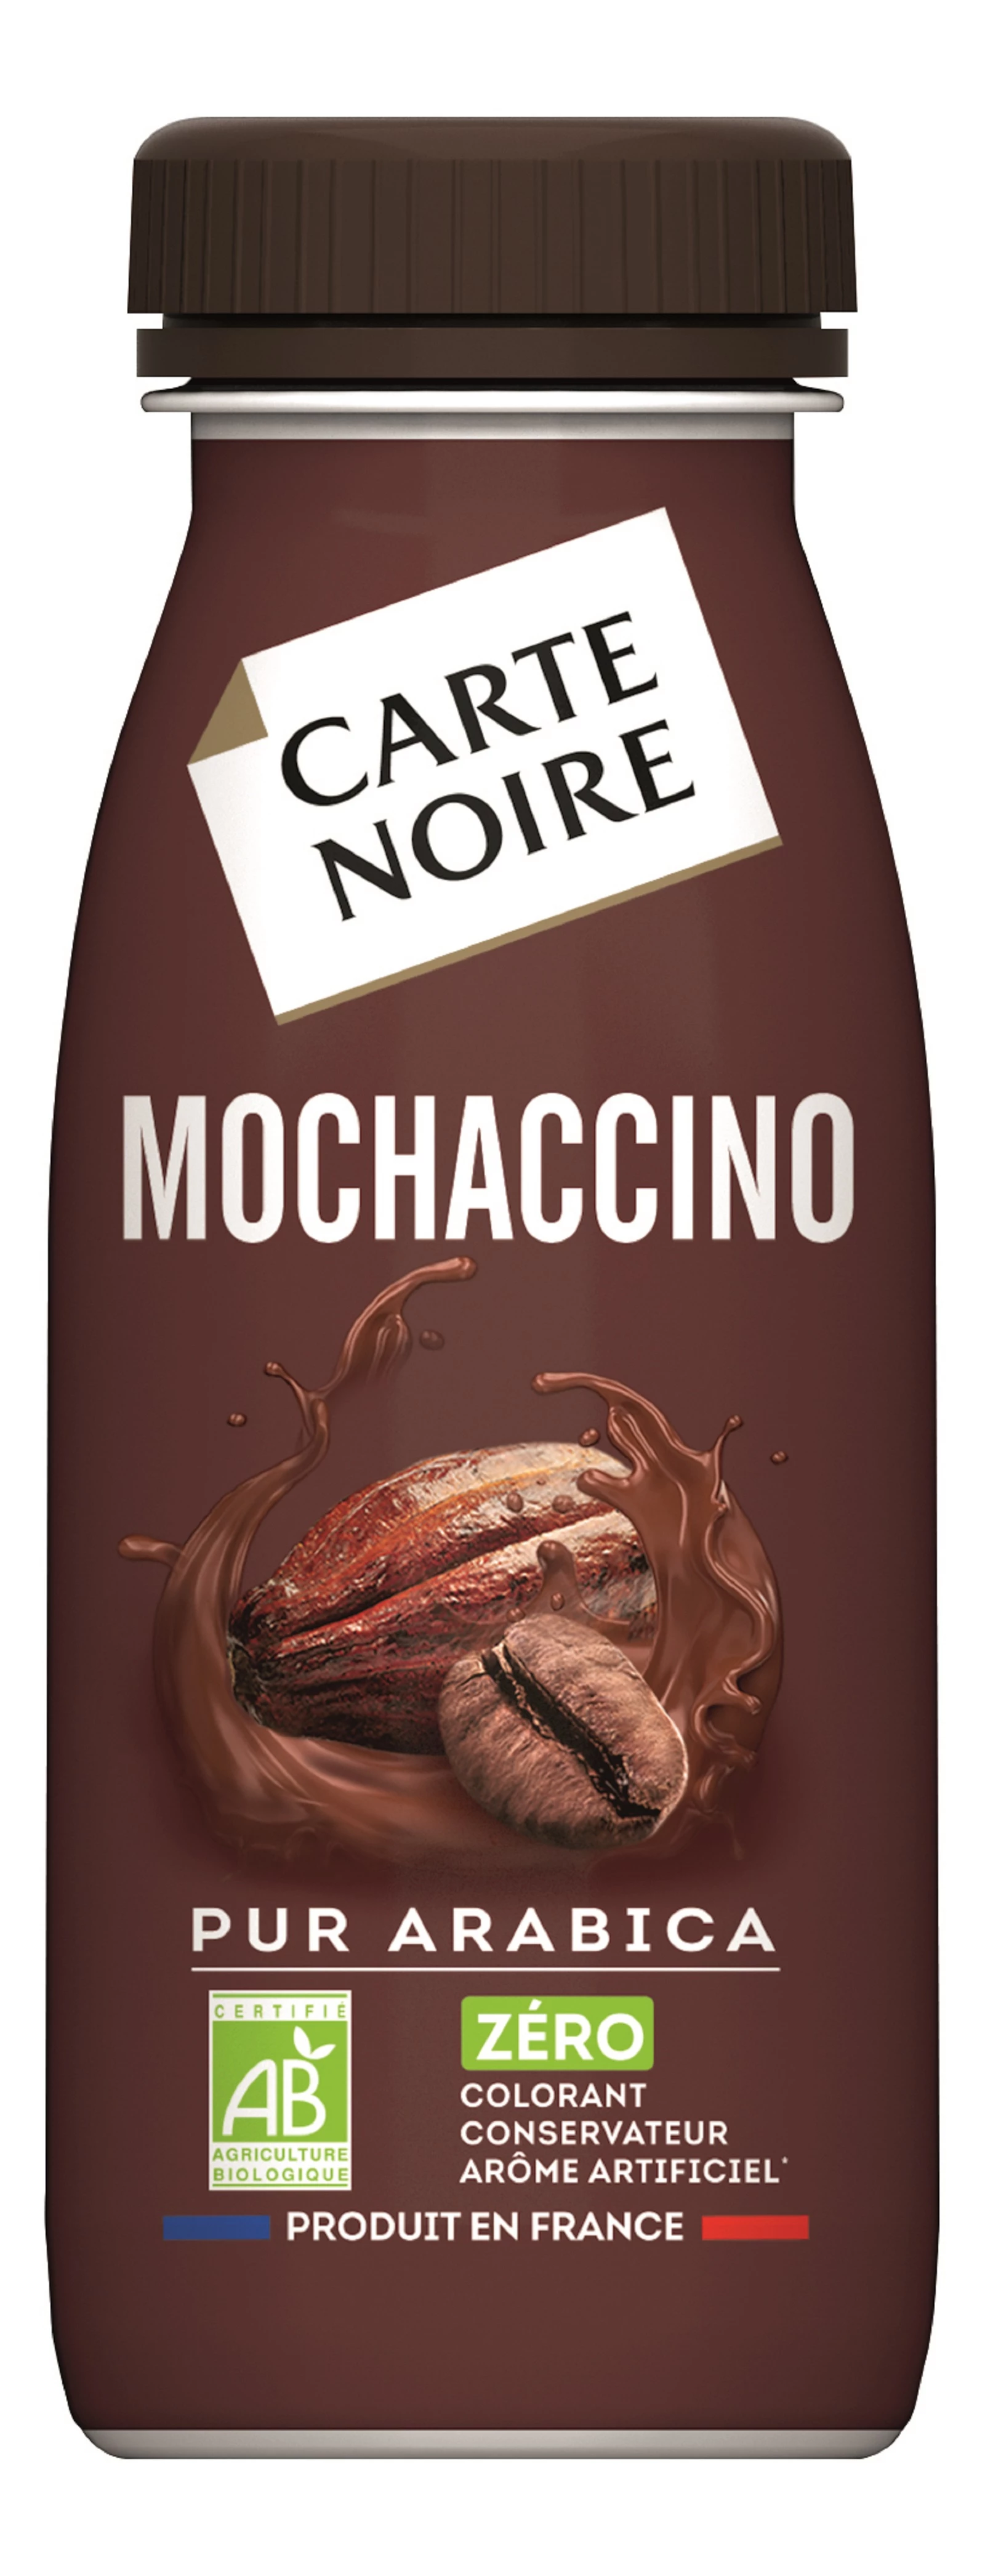 Cà phê Mochaccino hữu cơ 25cl - CARTE NOIRE